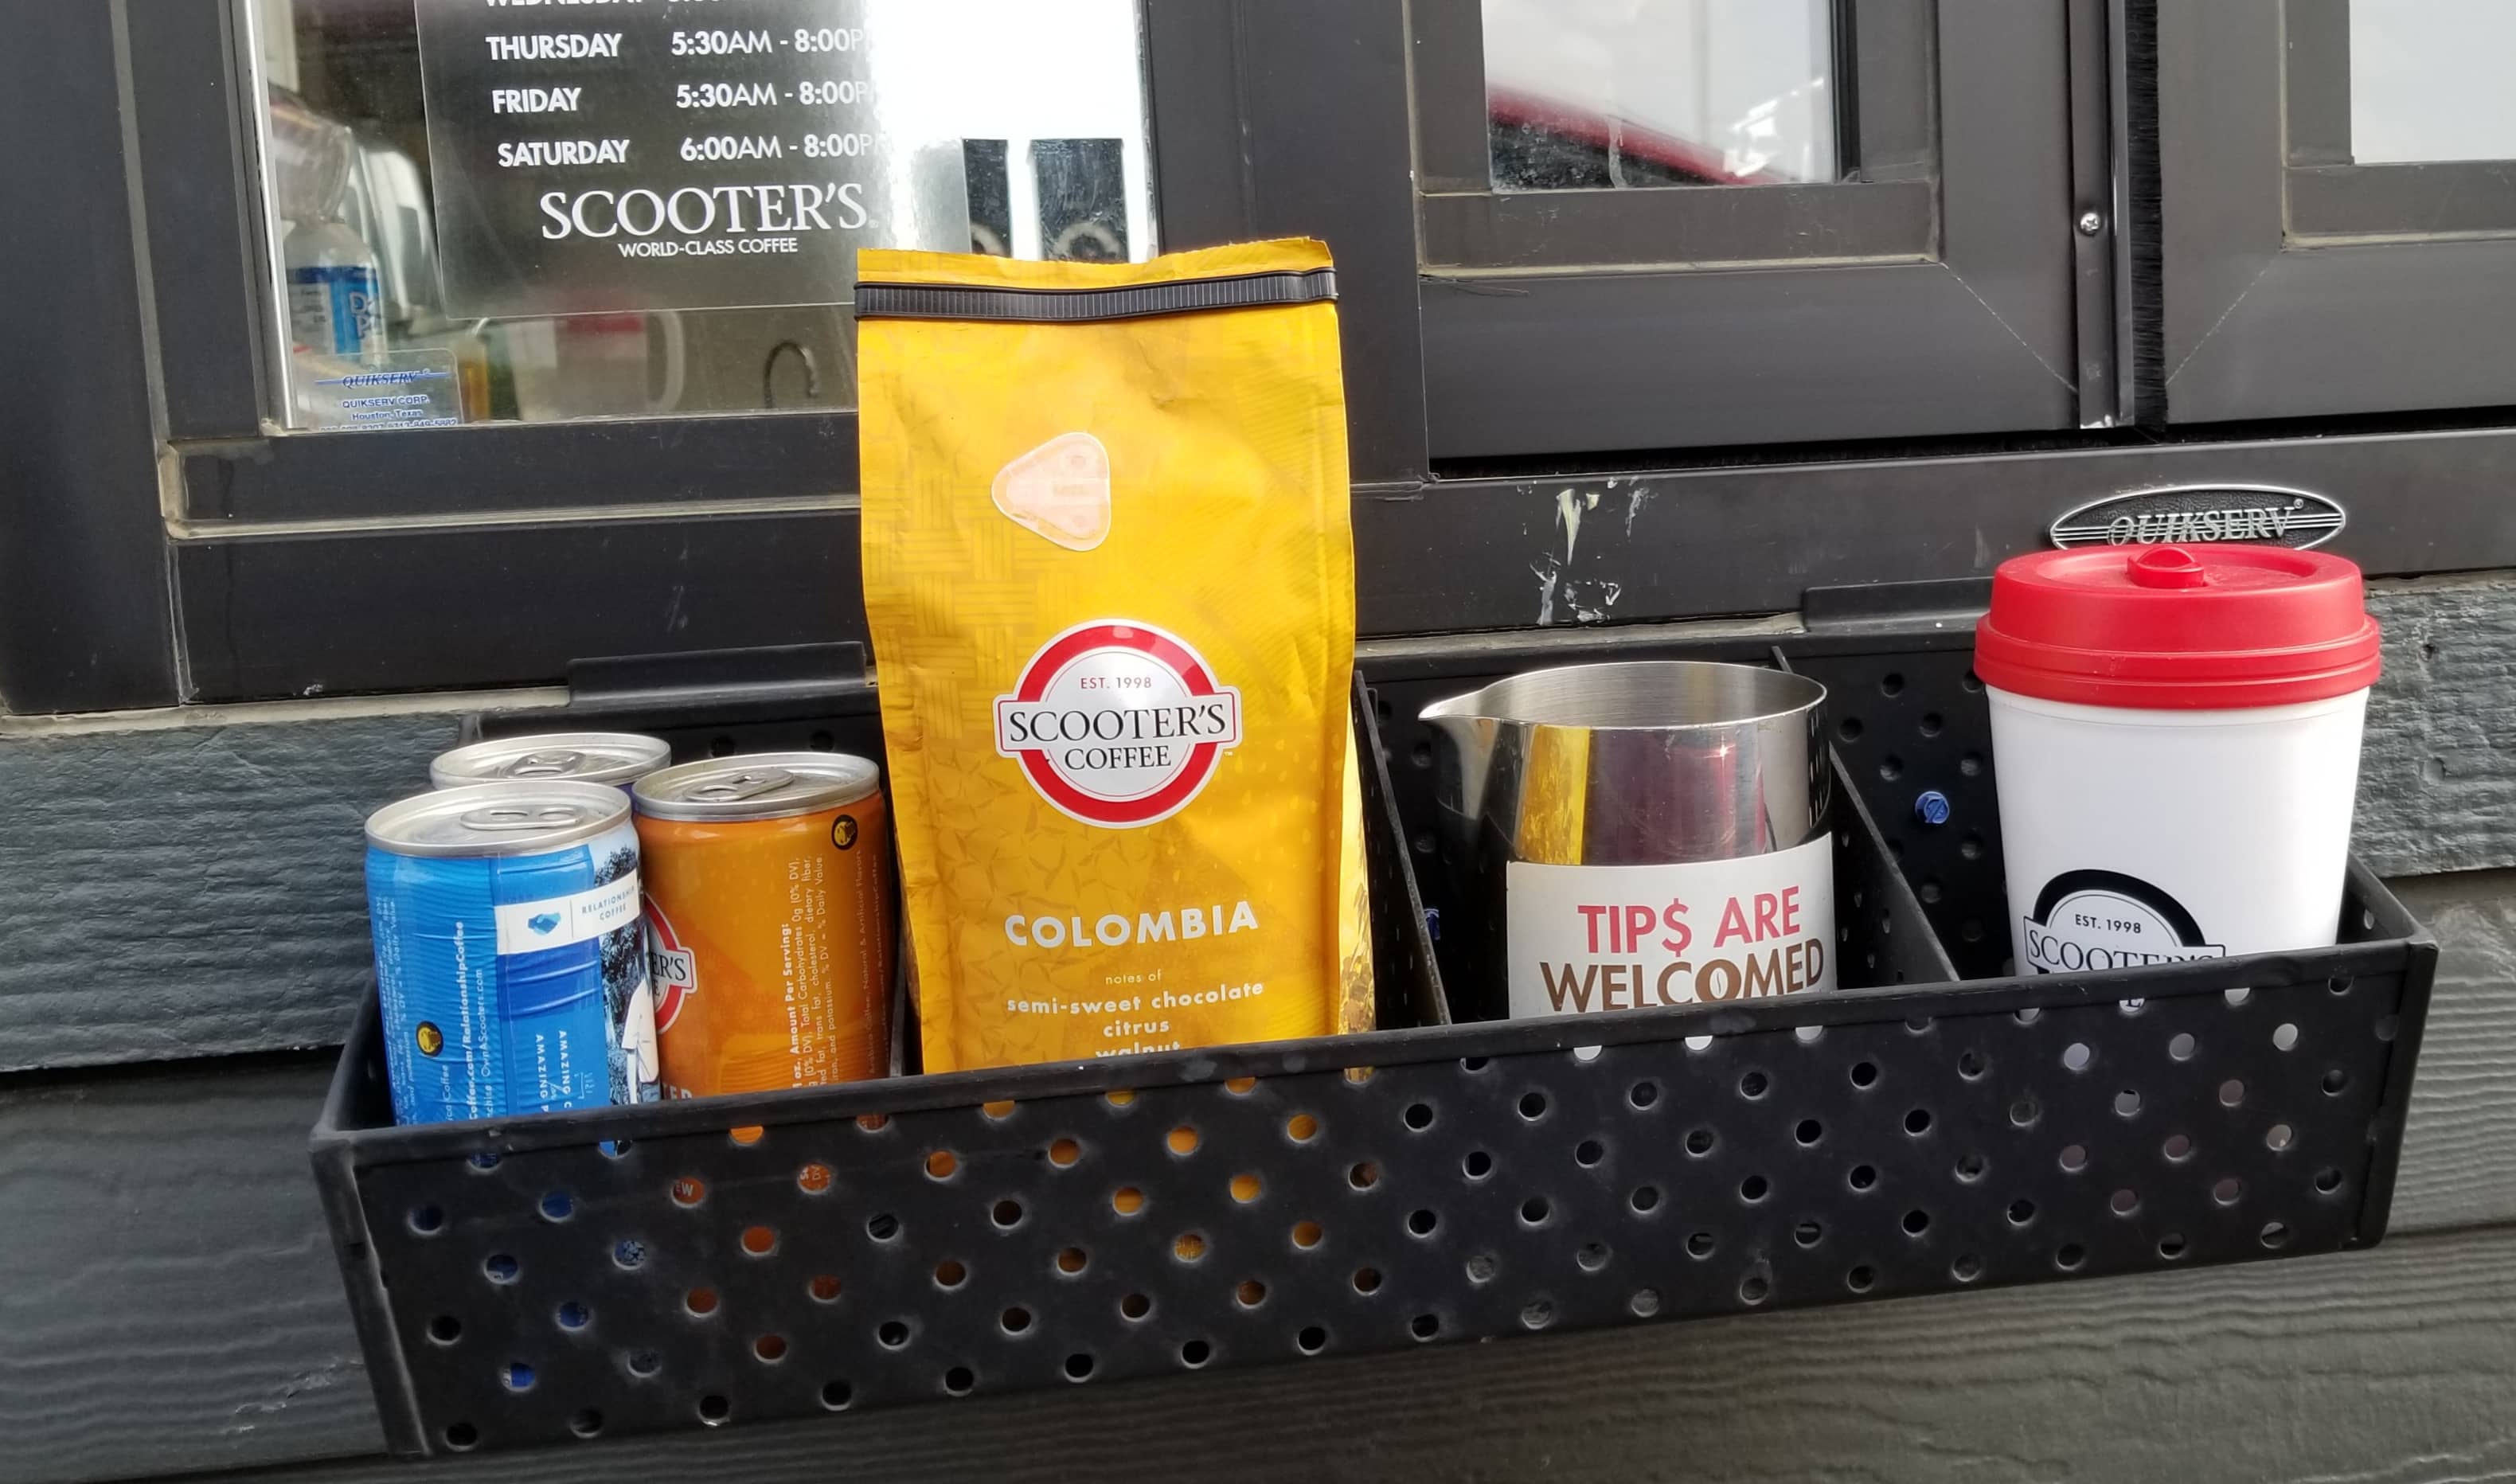 Scooter’s Coffee - Emporia (KS 66801), US, nearest coffee place